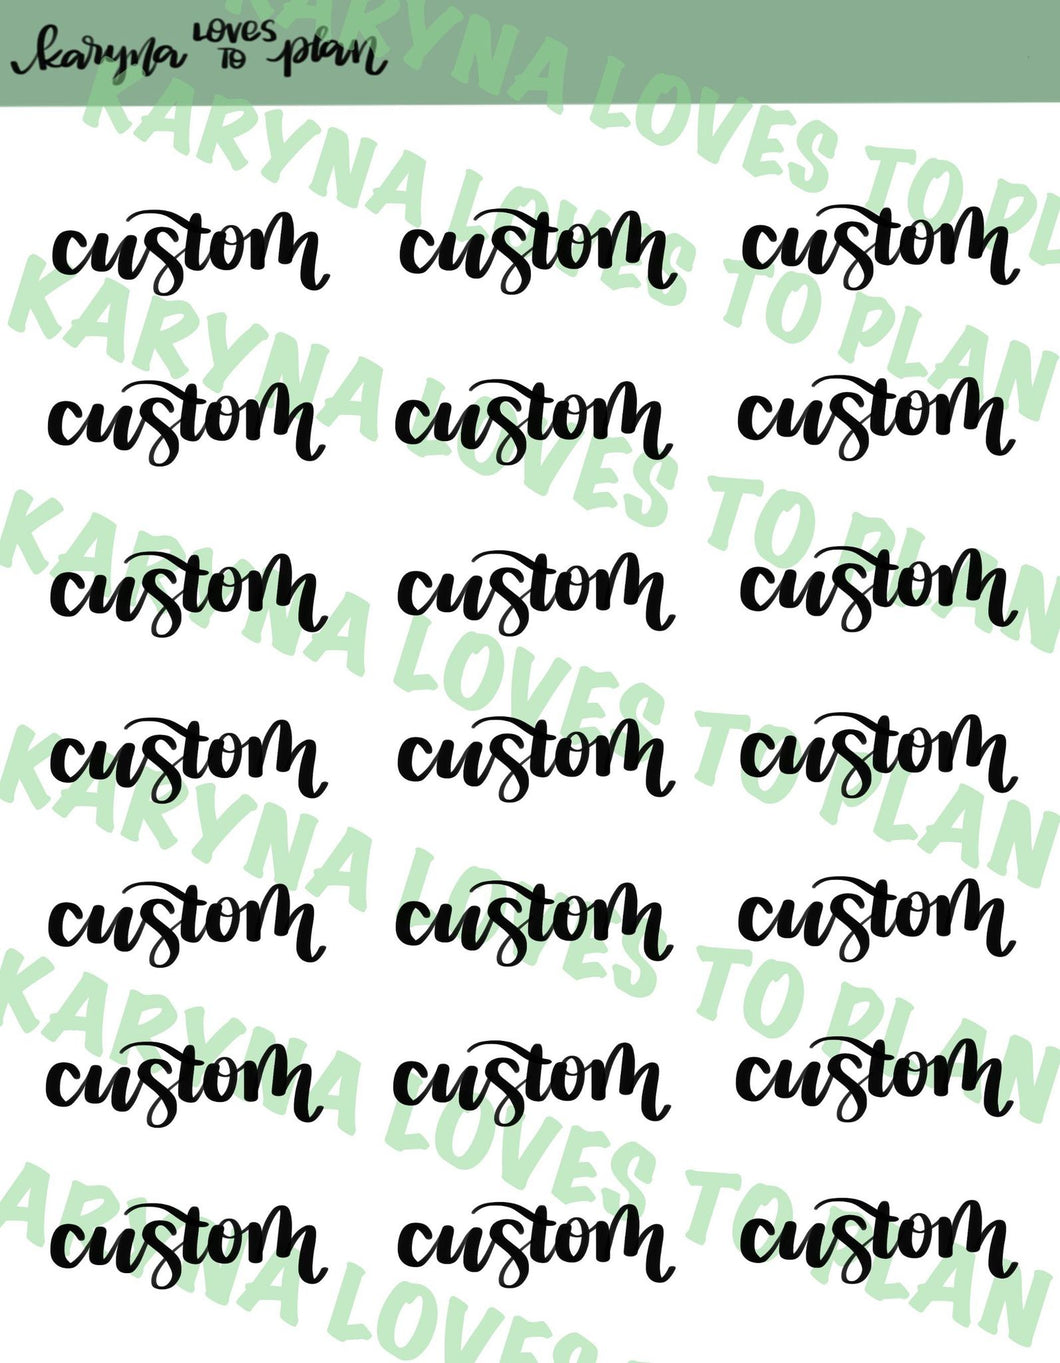 CUSTOM WORDS Sticker Sheet